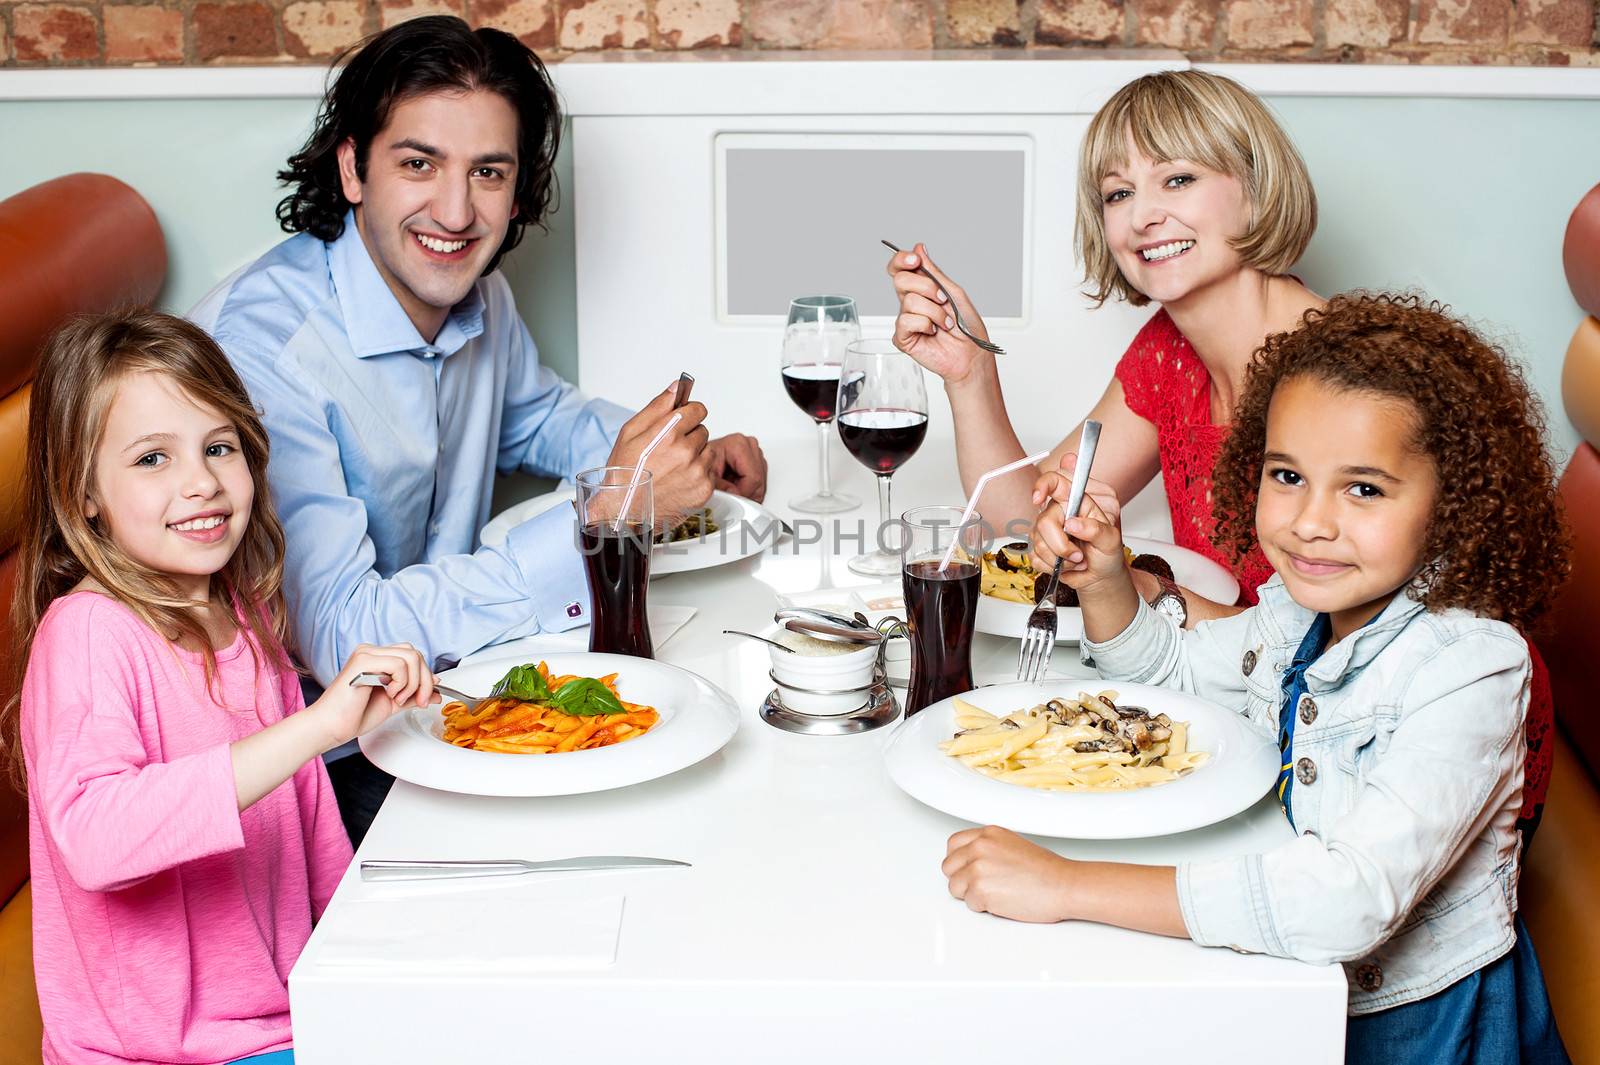 Family enjoying dinner outdoors on weekend